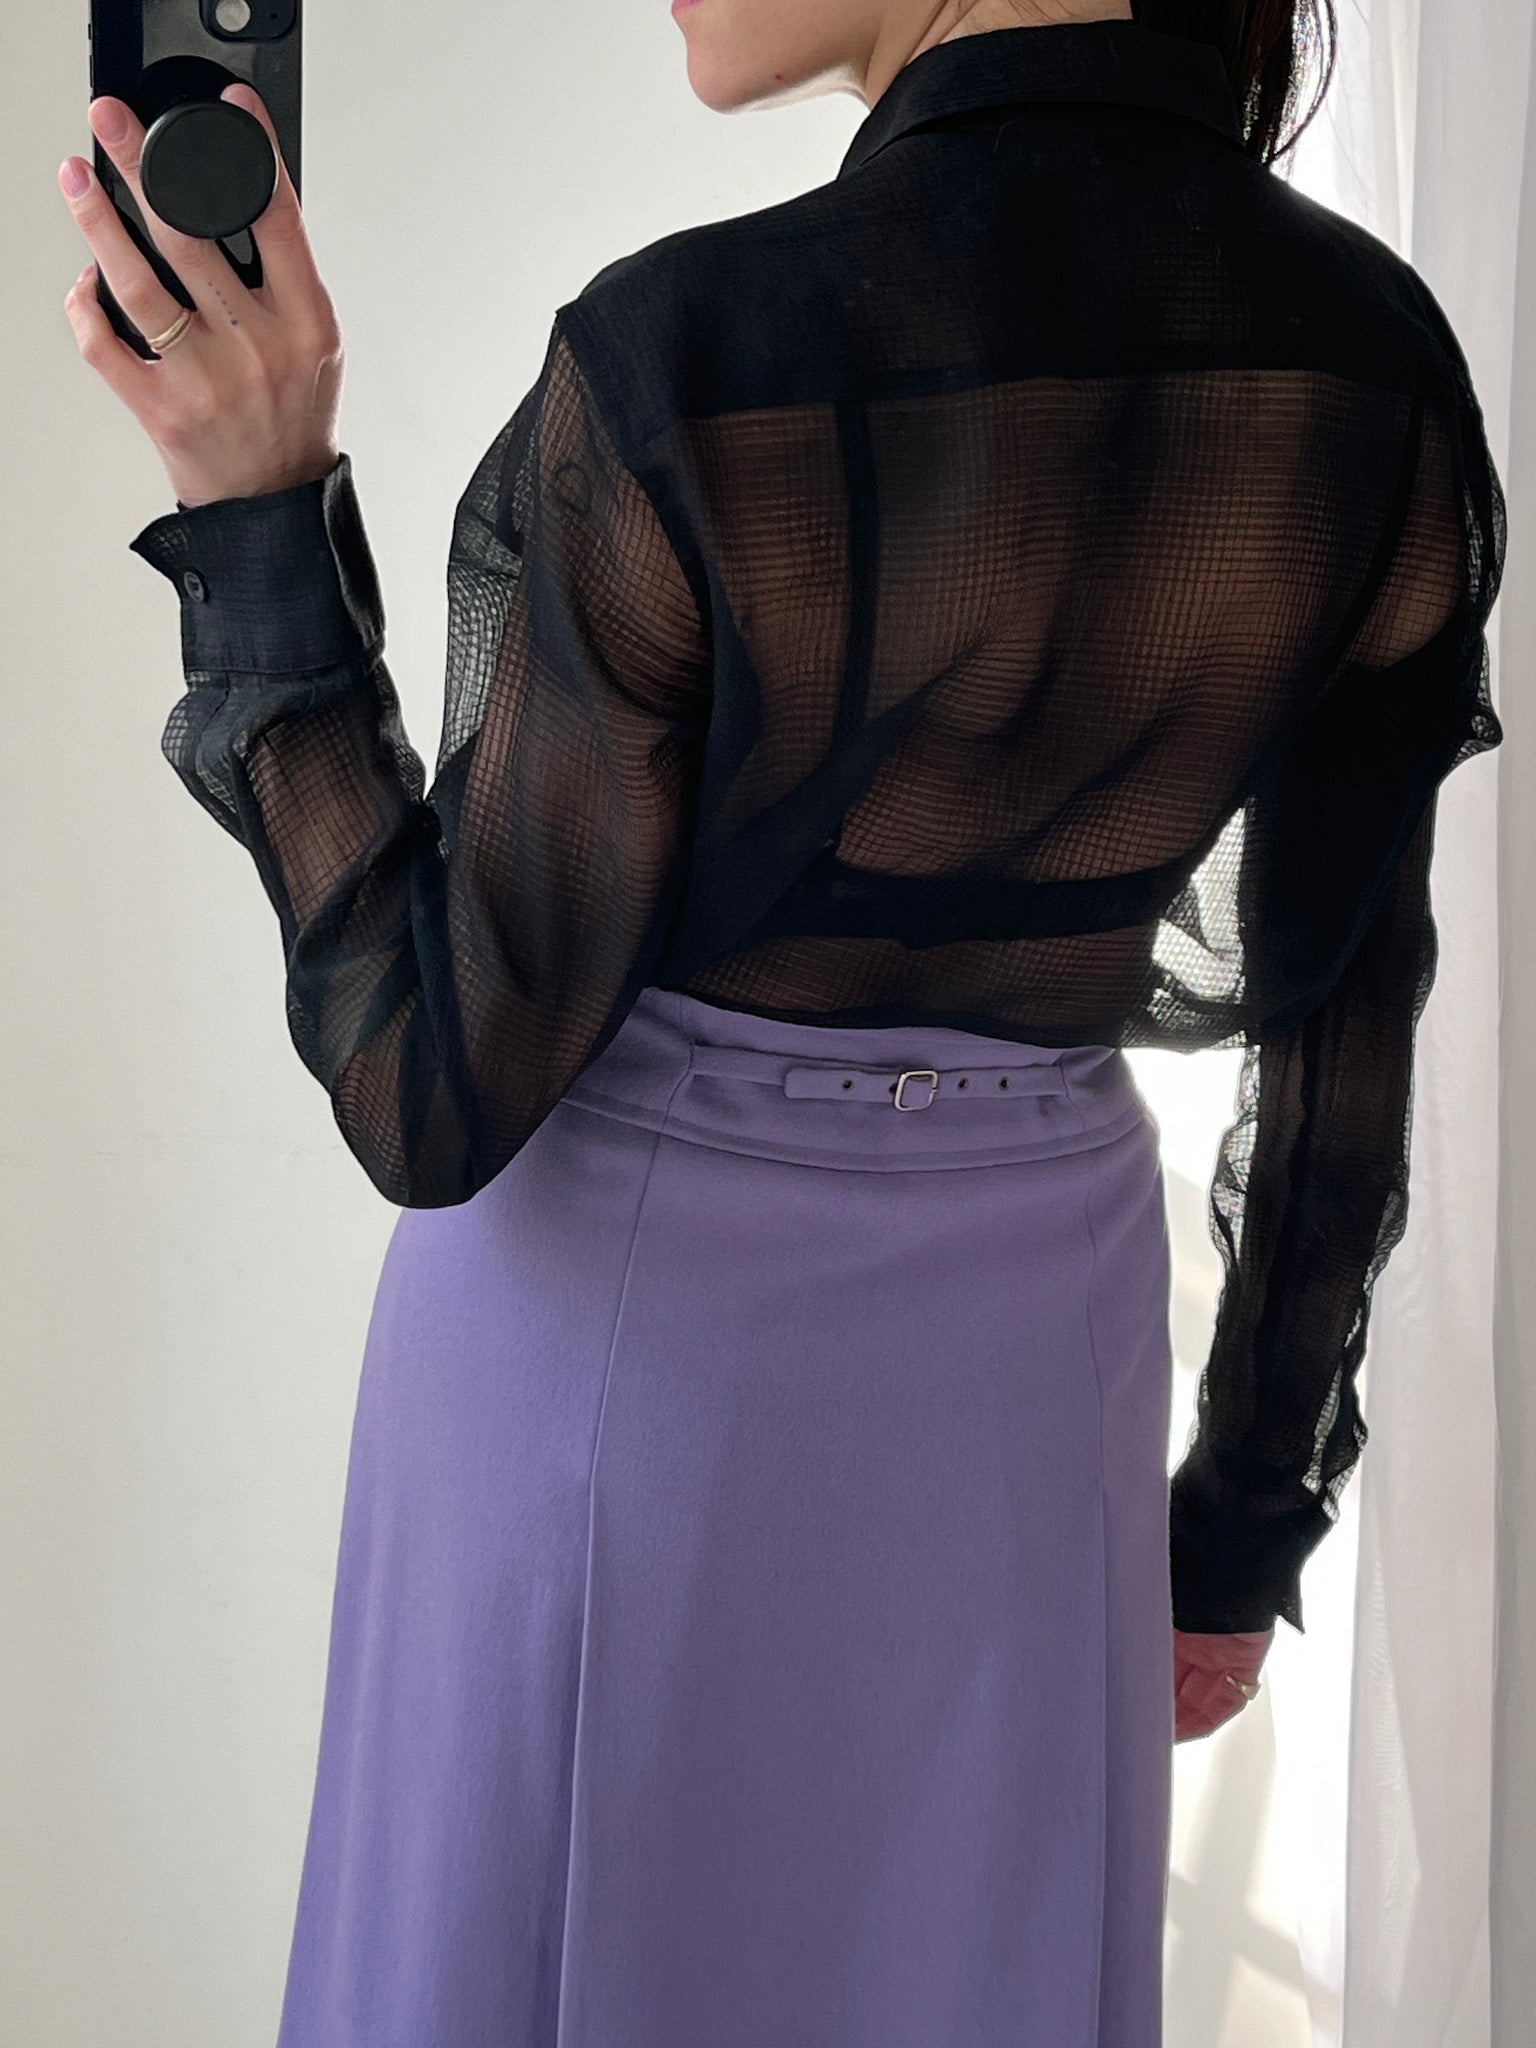 Miu Miu Lavender Wrap-Skirt, 1996